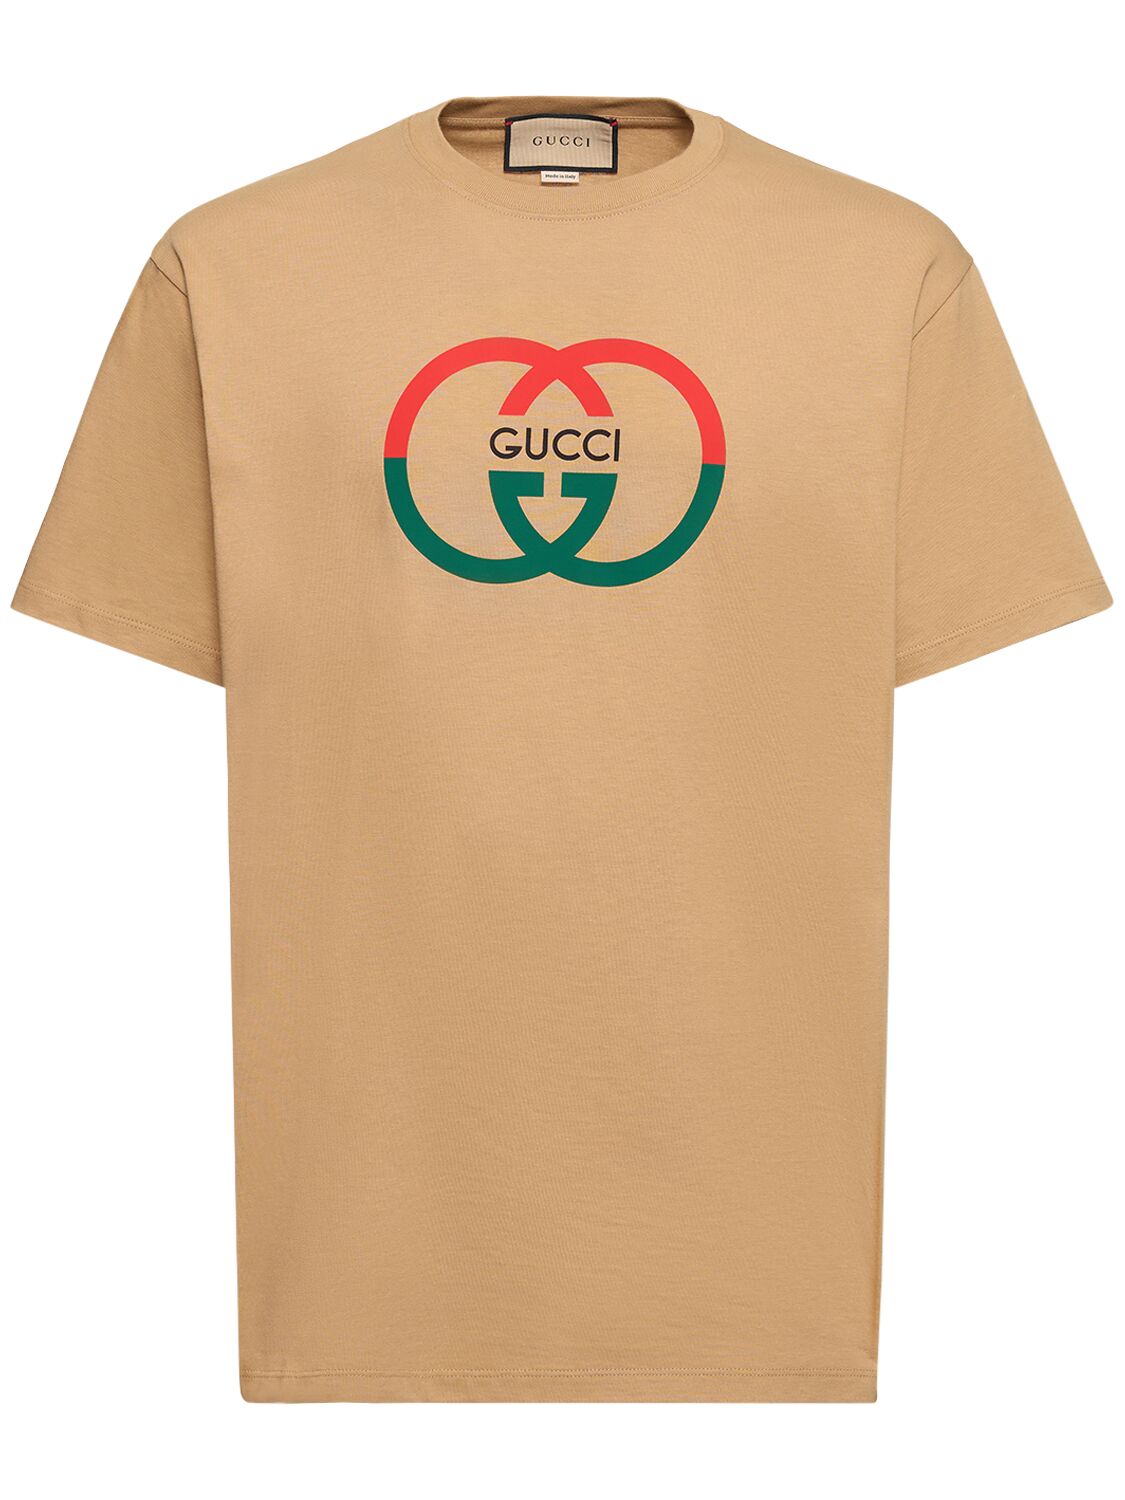 Image of Gg Cotton Jersey T-shirt